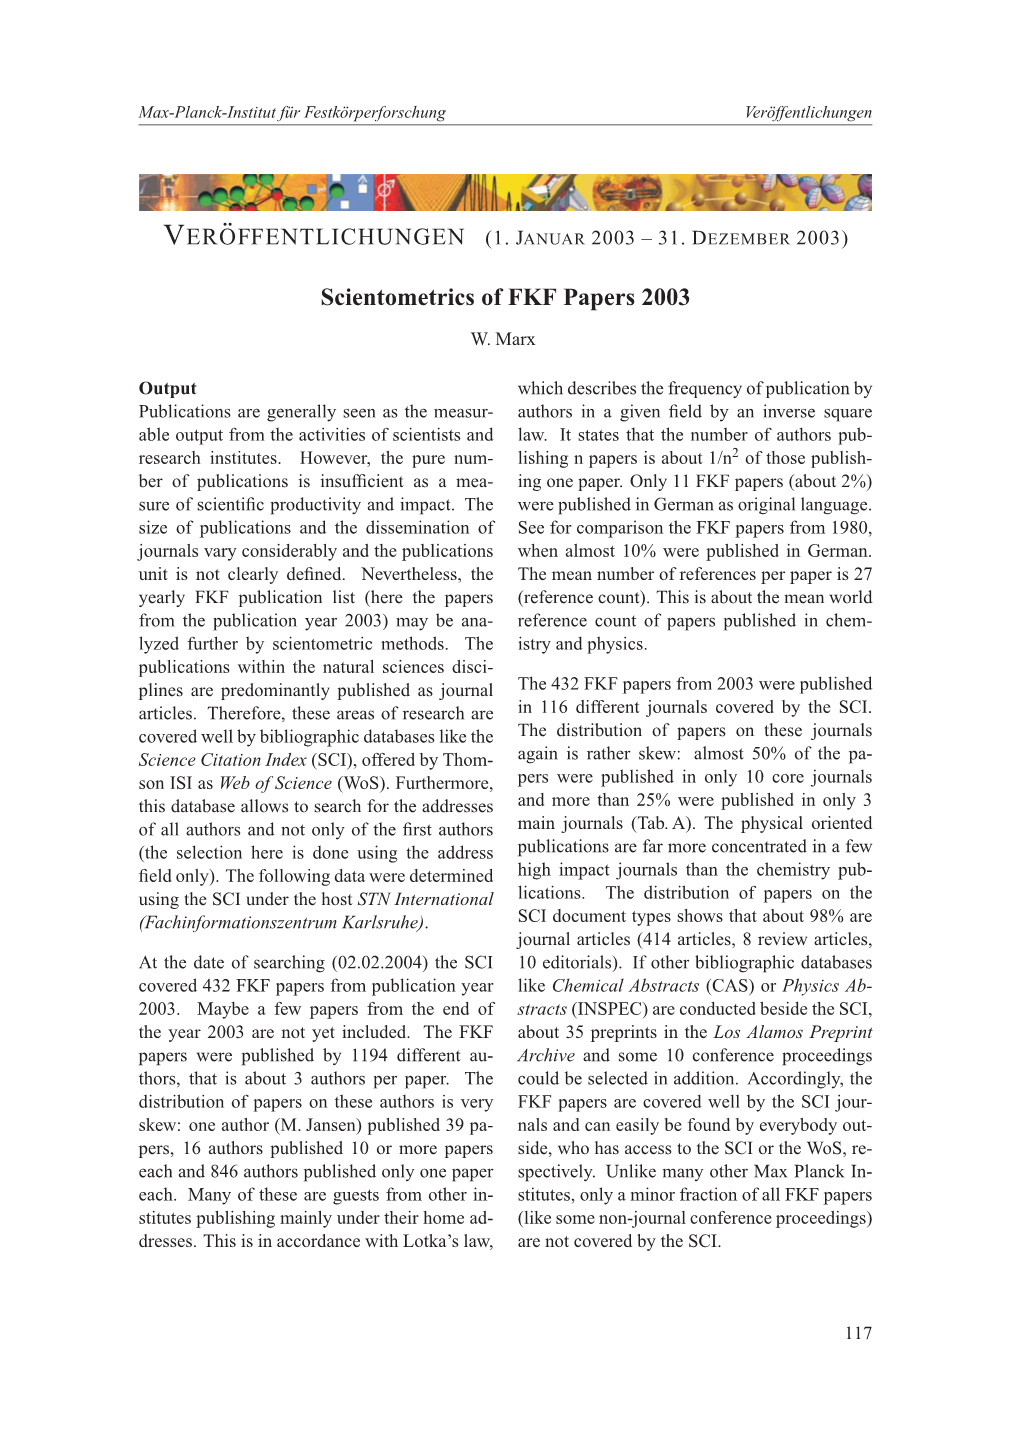 Scientometrics of FKF Papers 2003